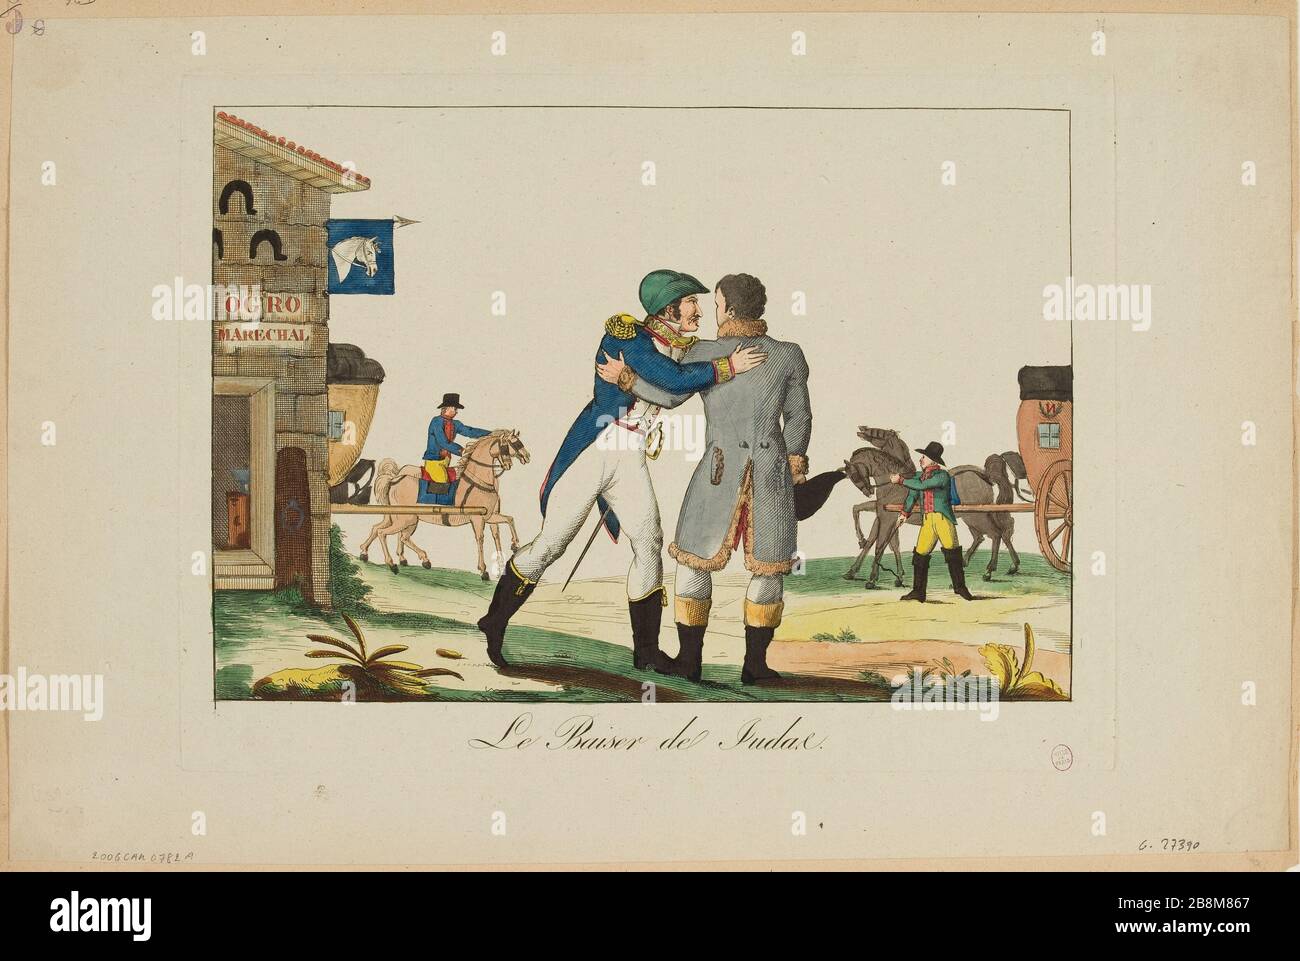 Il bacio di Giuda Anonyme. "Le baiser de Judas". Eau-forte coloriée. 1814. Parigi, musée Carnavalet. Foto Stock